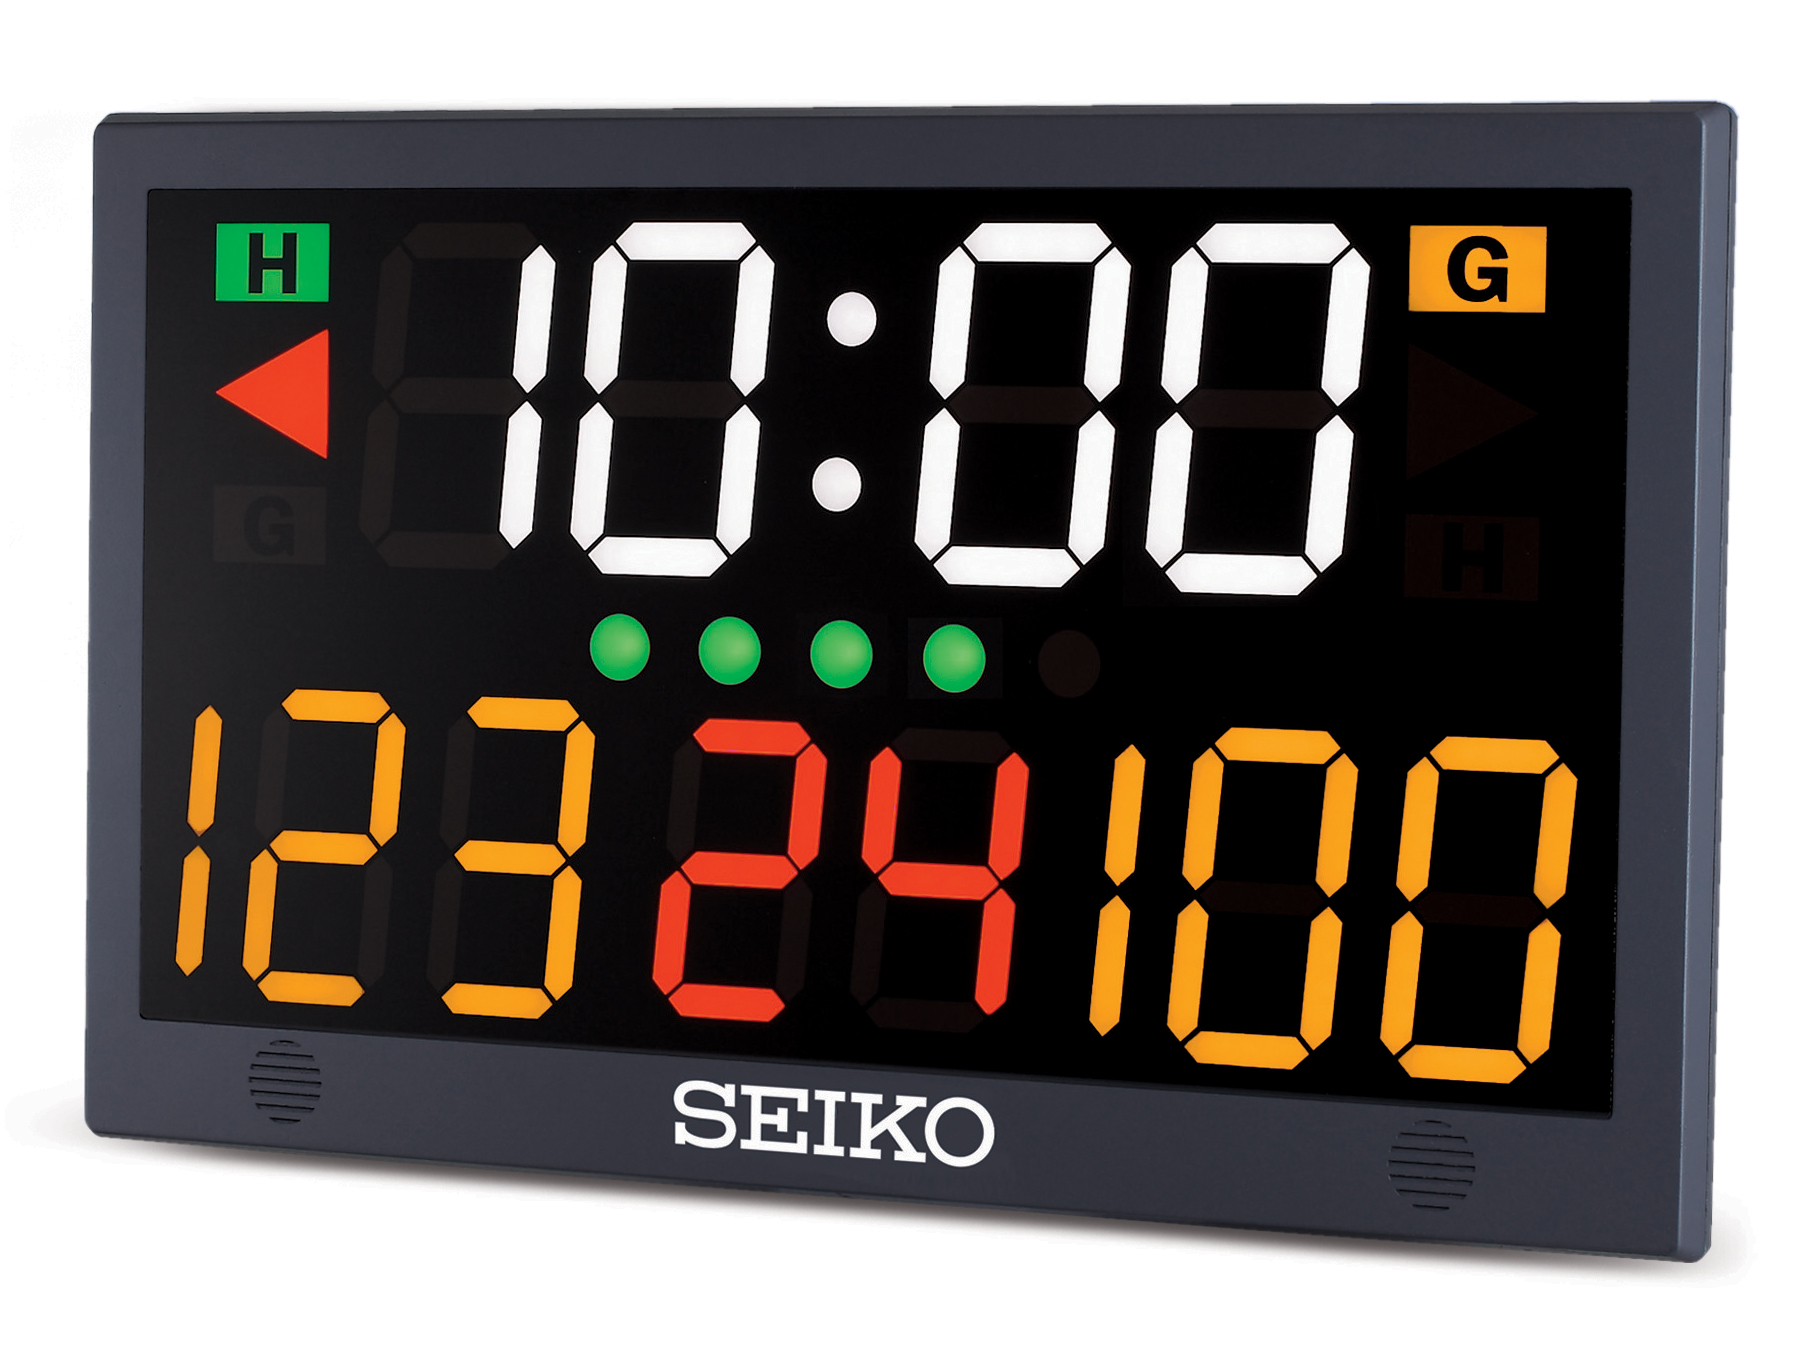 Seiko Multi-Function Portable Scoreboard